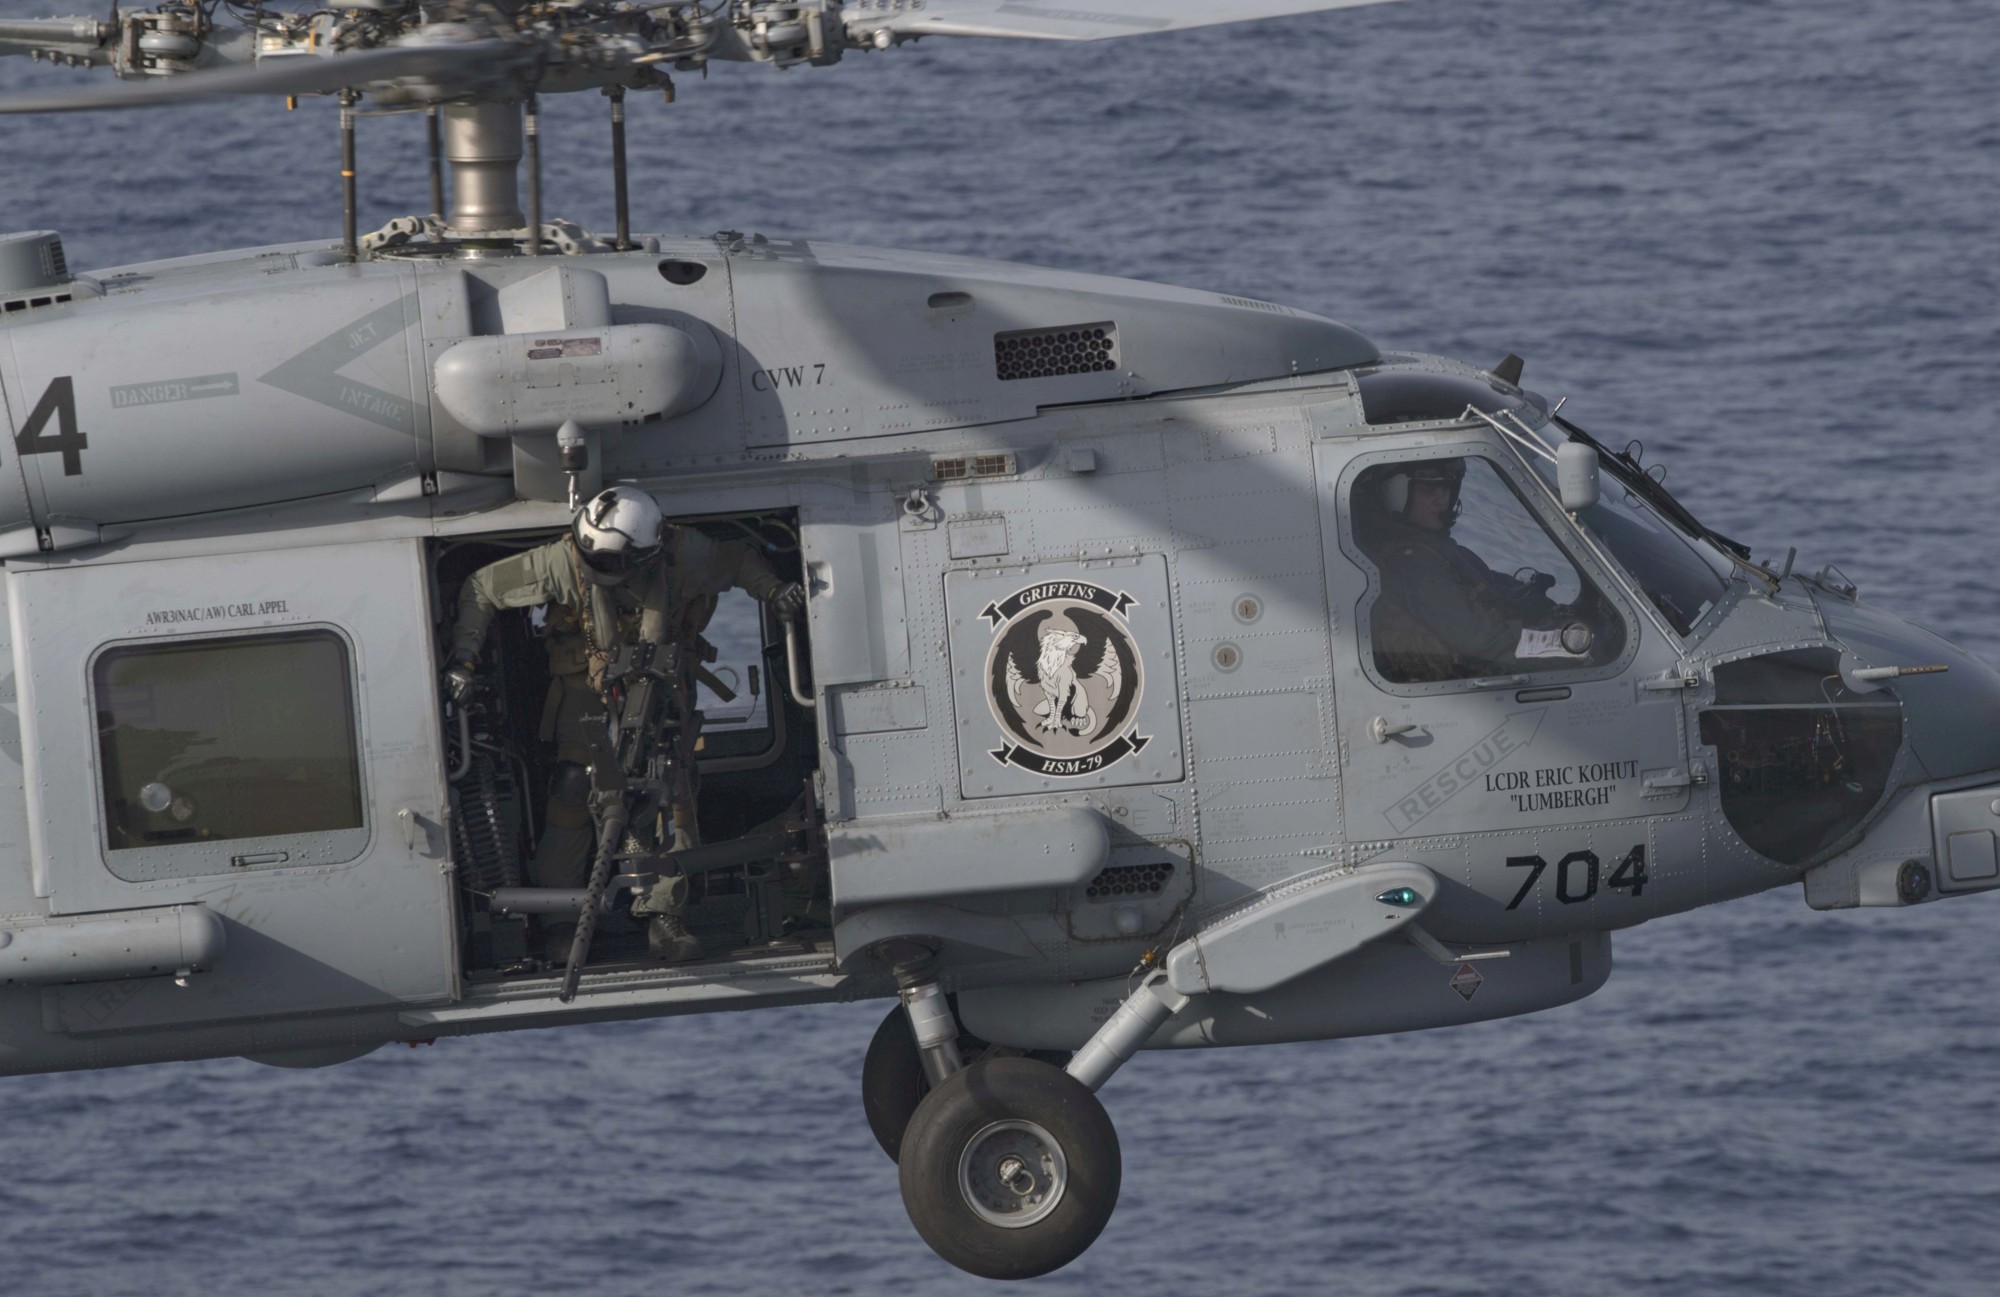 hsm-79 griffins helicopter maritime strike squadron mh-60r seahawk cvw-7 cvn-72 uss abraham lincoln 2019